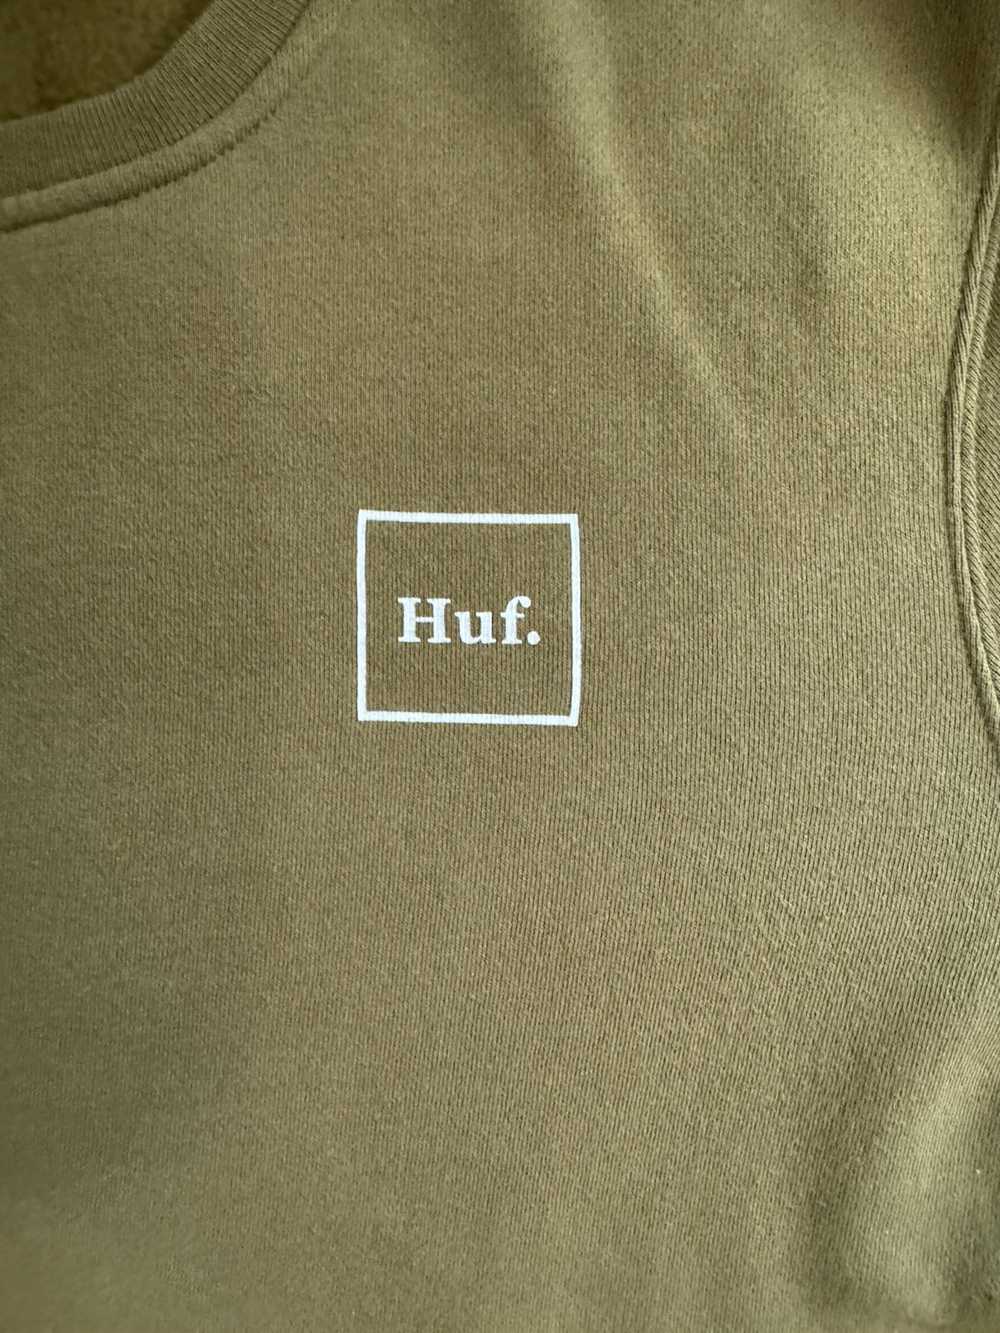 Huf Olive green HUF Worldwide Sweater - image 2